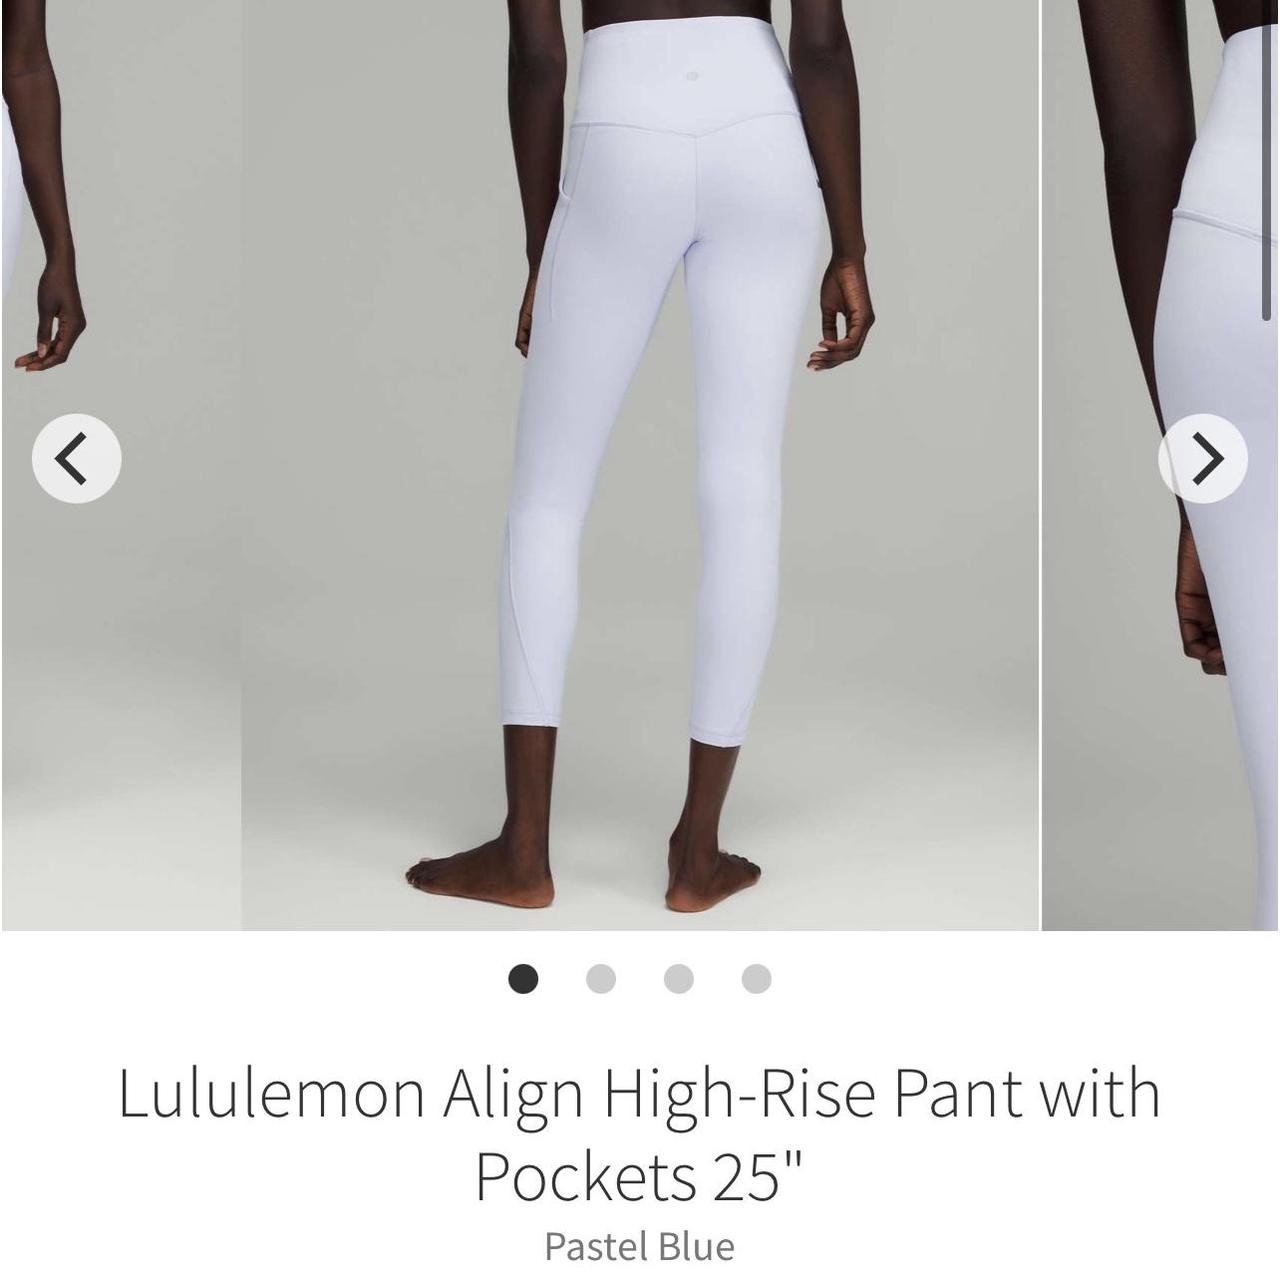 Lululemon NWT 25” Align Leggings with pockets in